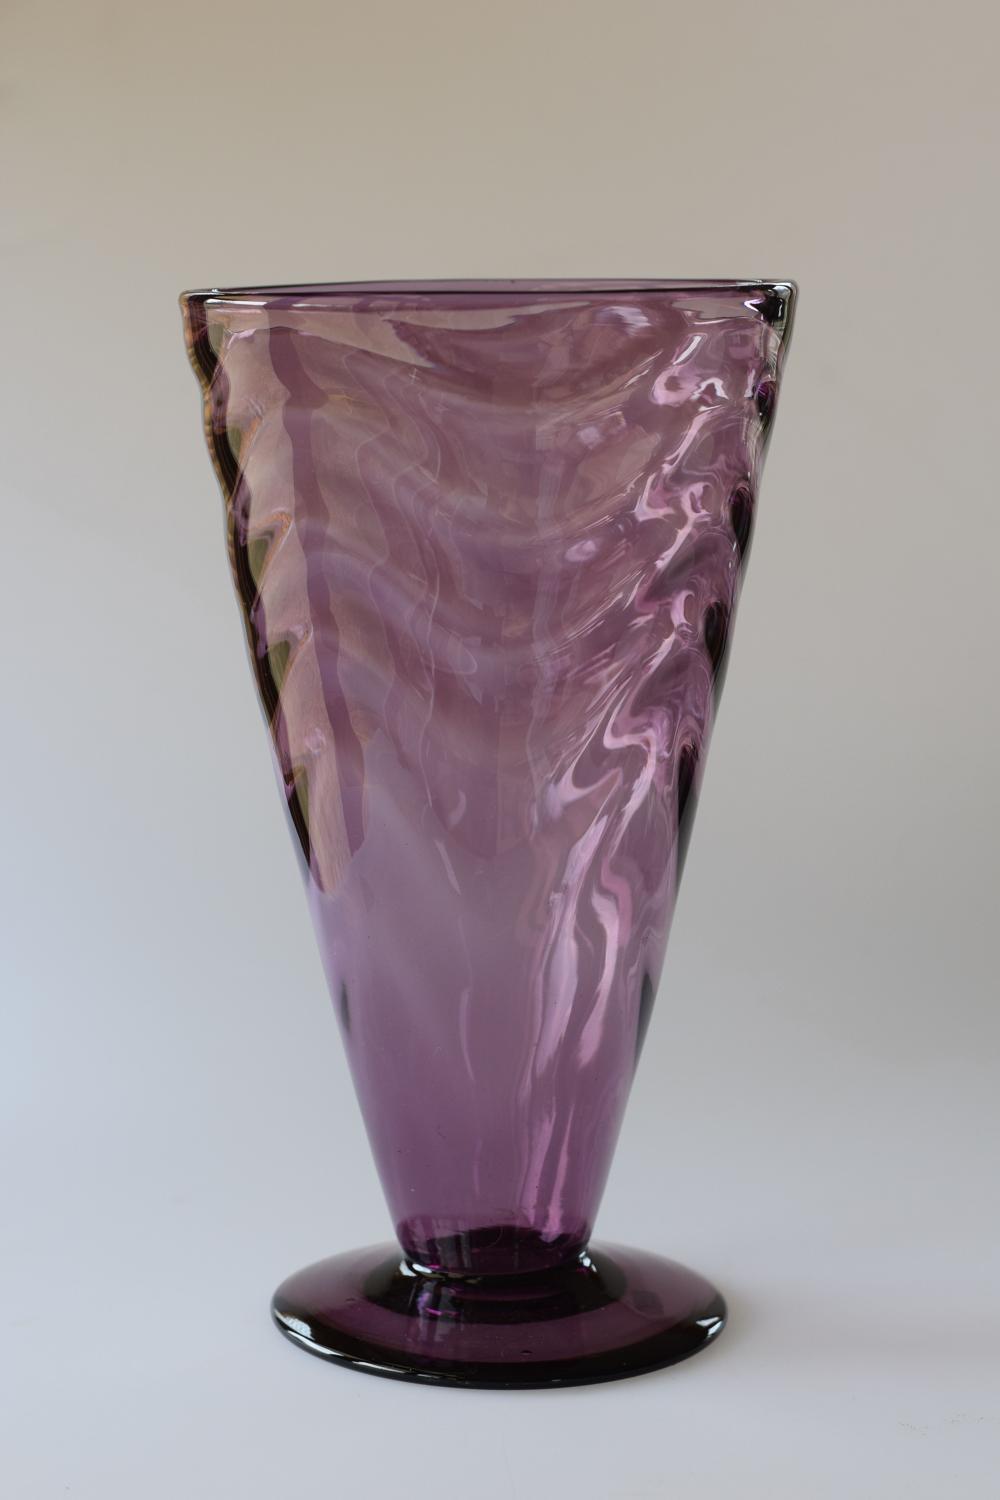 Amethyst vase by Webb.